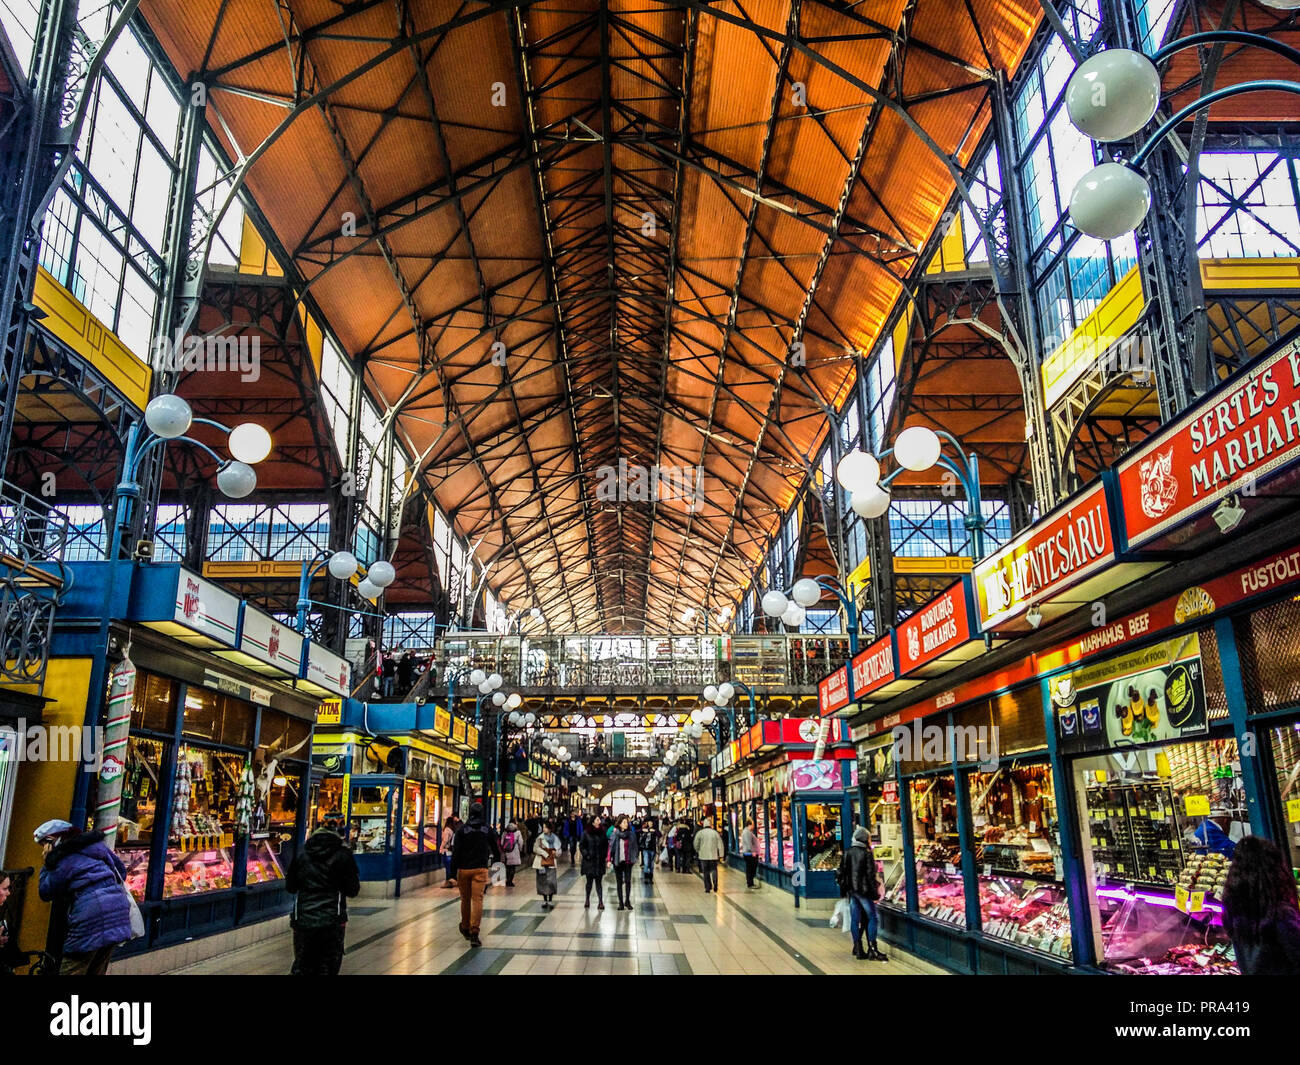 Great Market Hall, Budapest, Hungary Stock Photo - Alamy